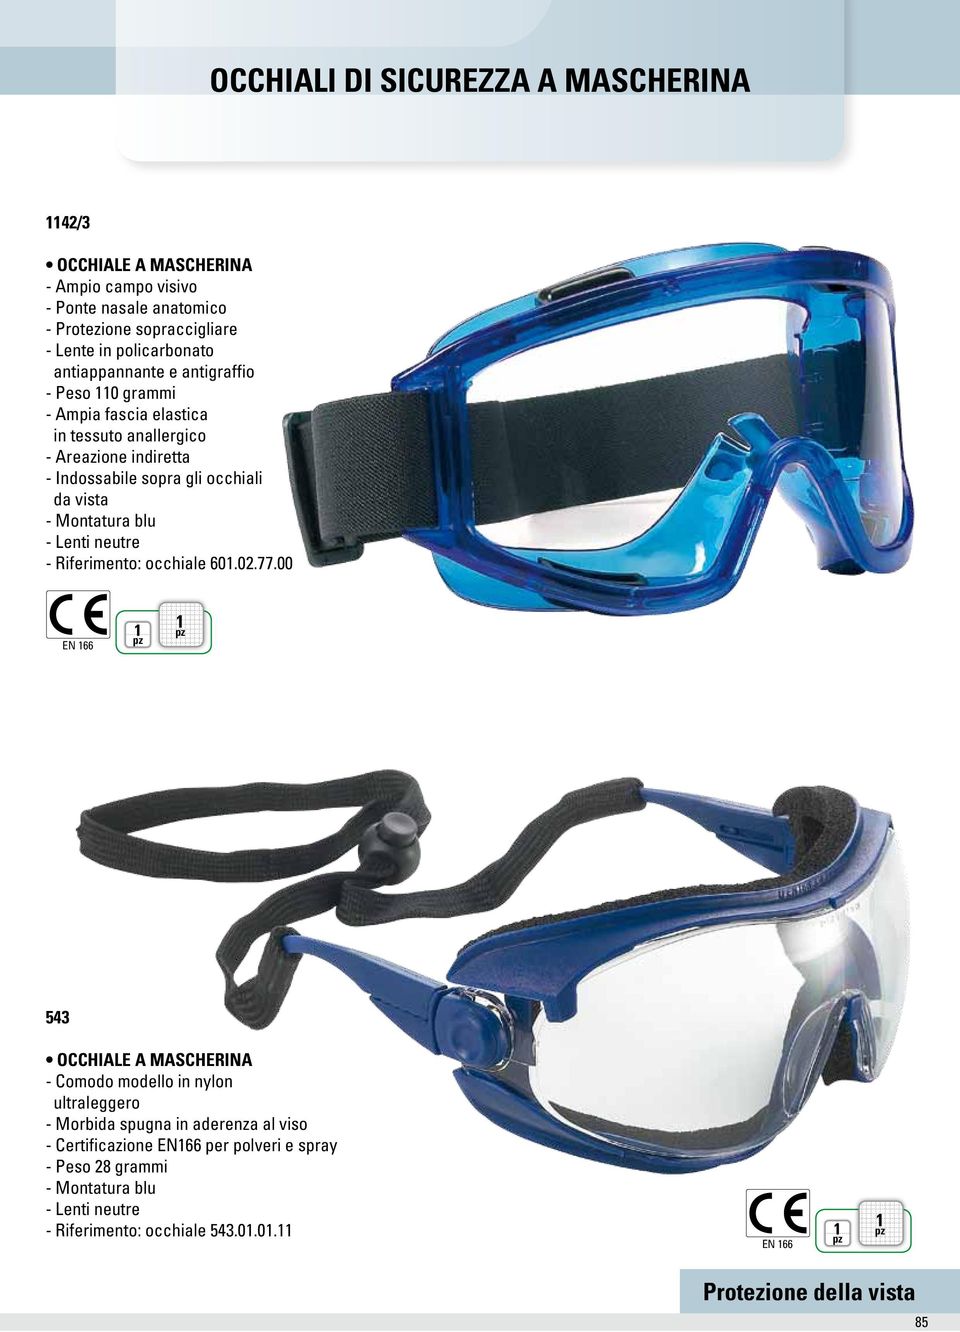 occhiali da vista - Montatura blu - Riferimento: occhiale 60.02.77.